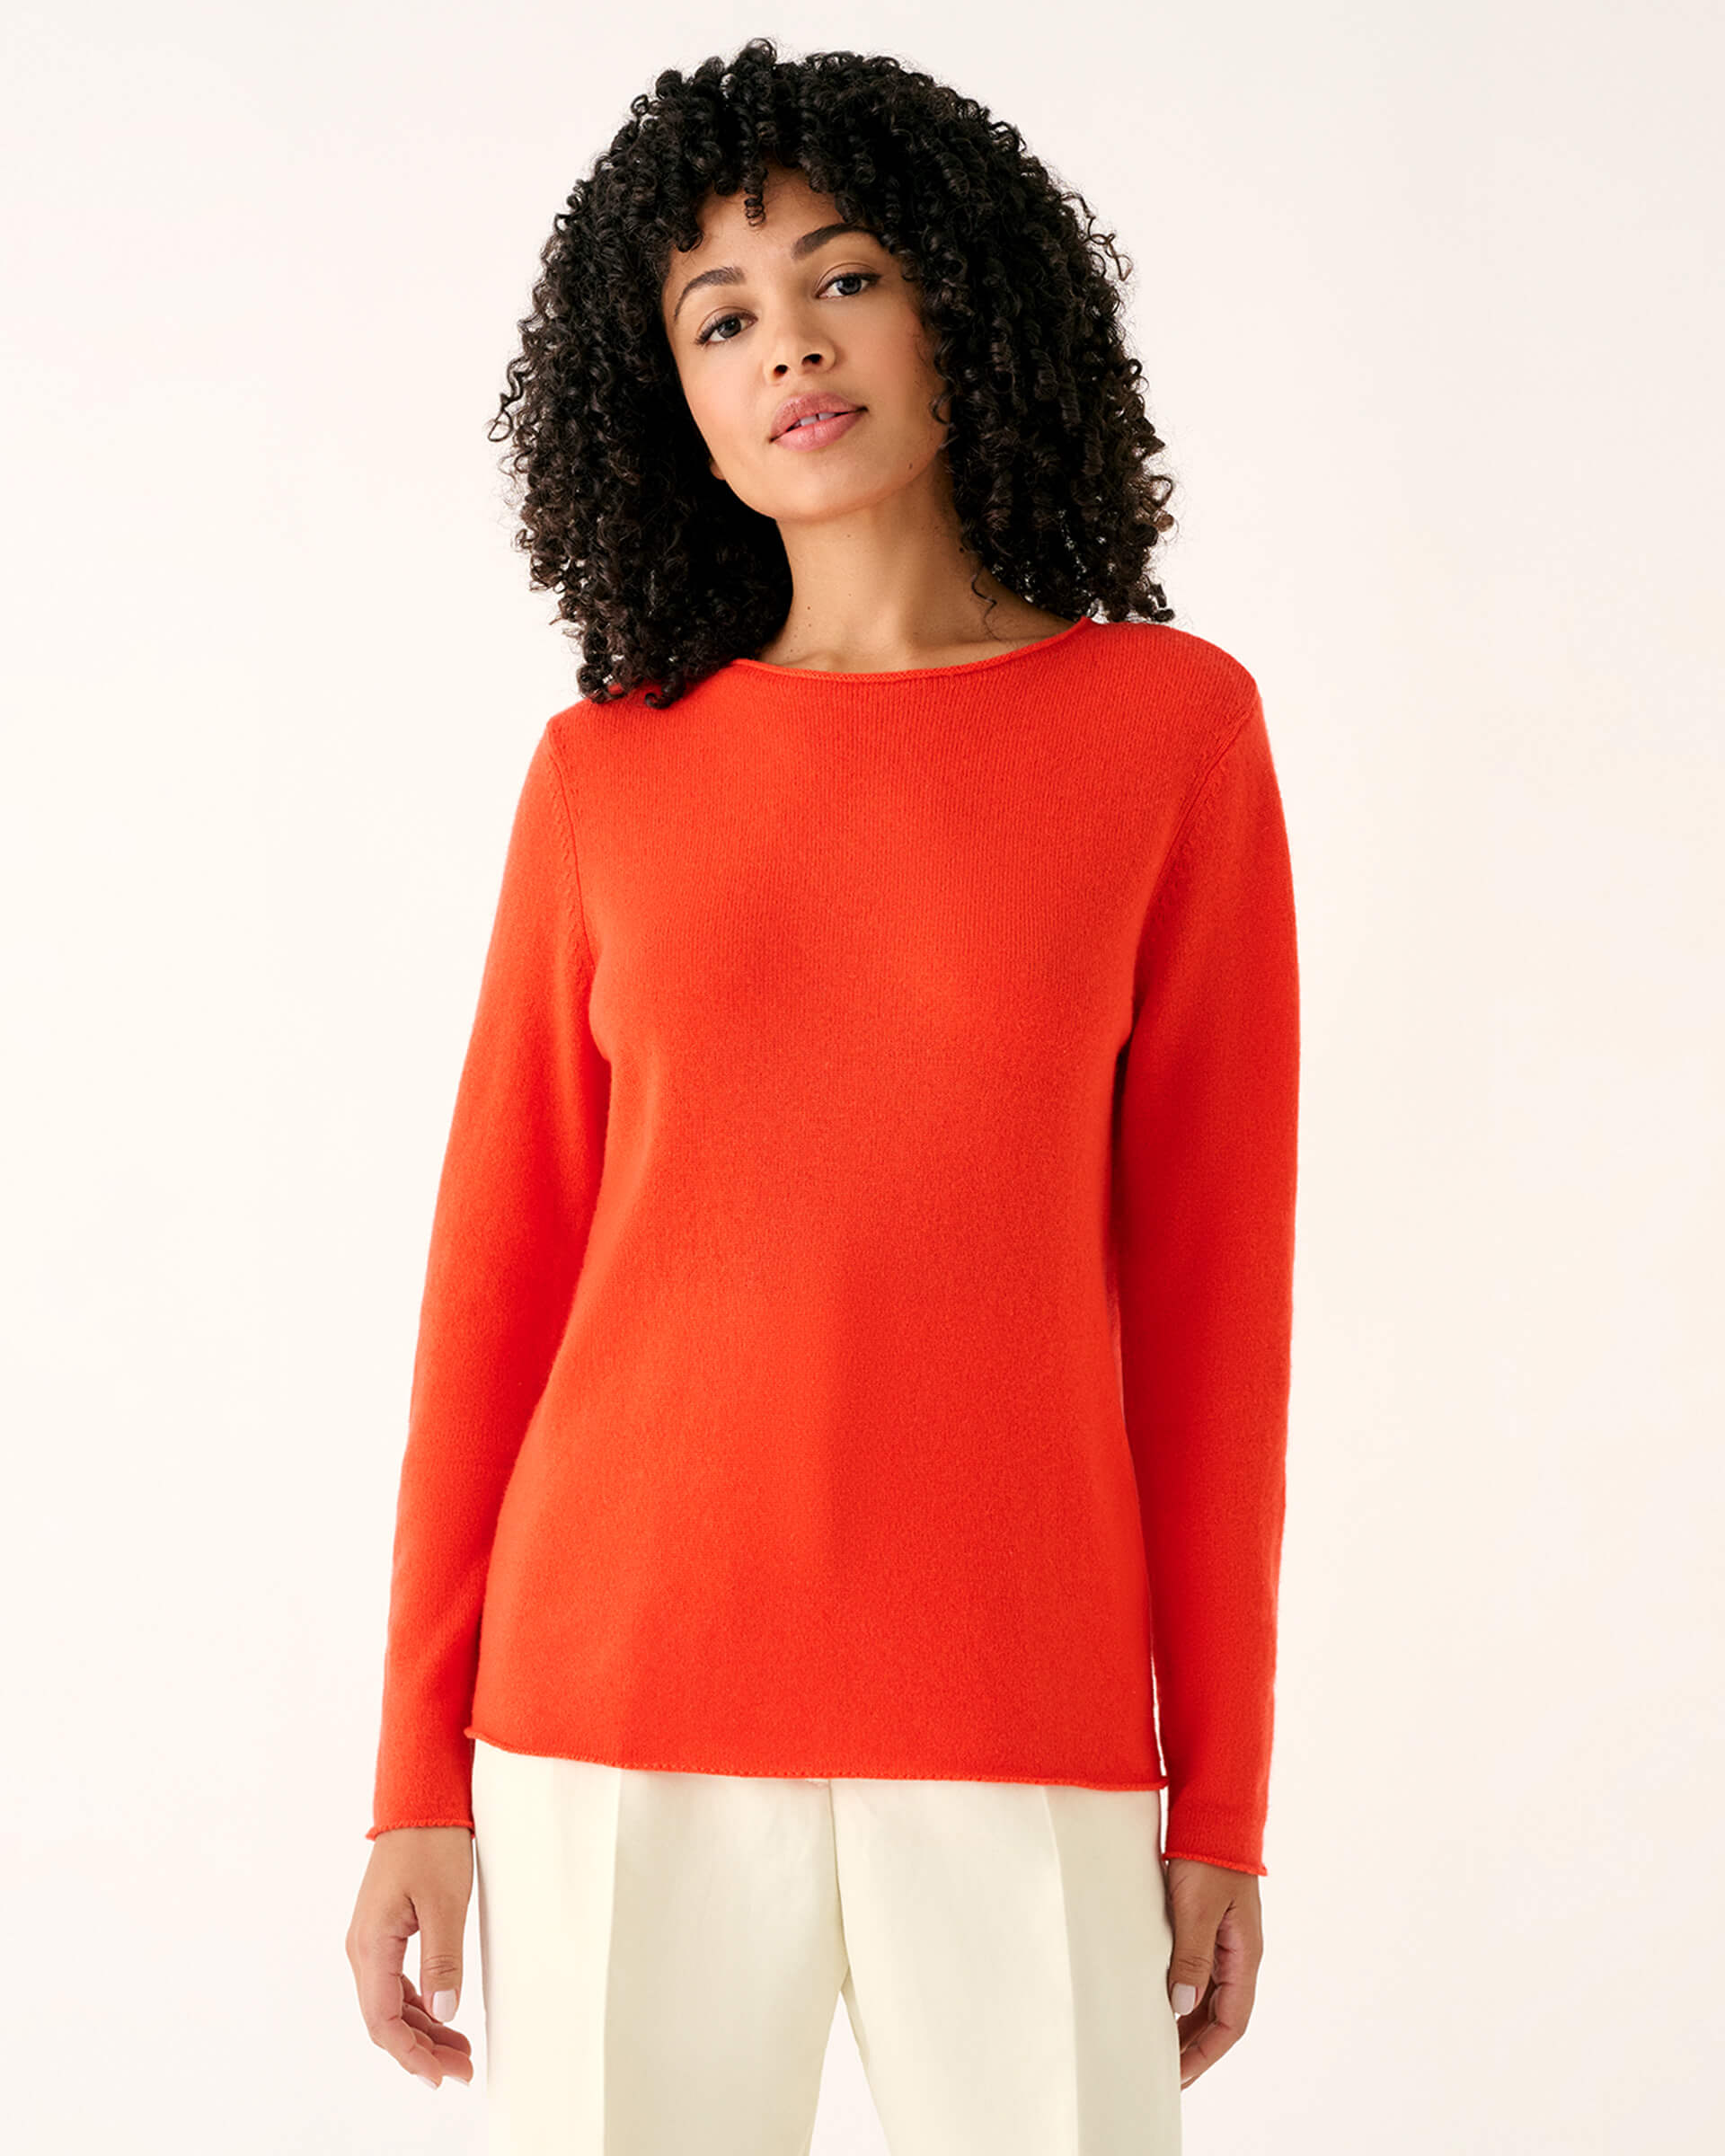 Carmel Fitted Cashmere Sweater in Orange